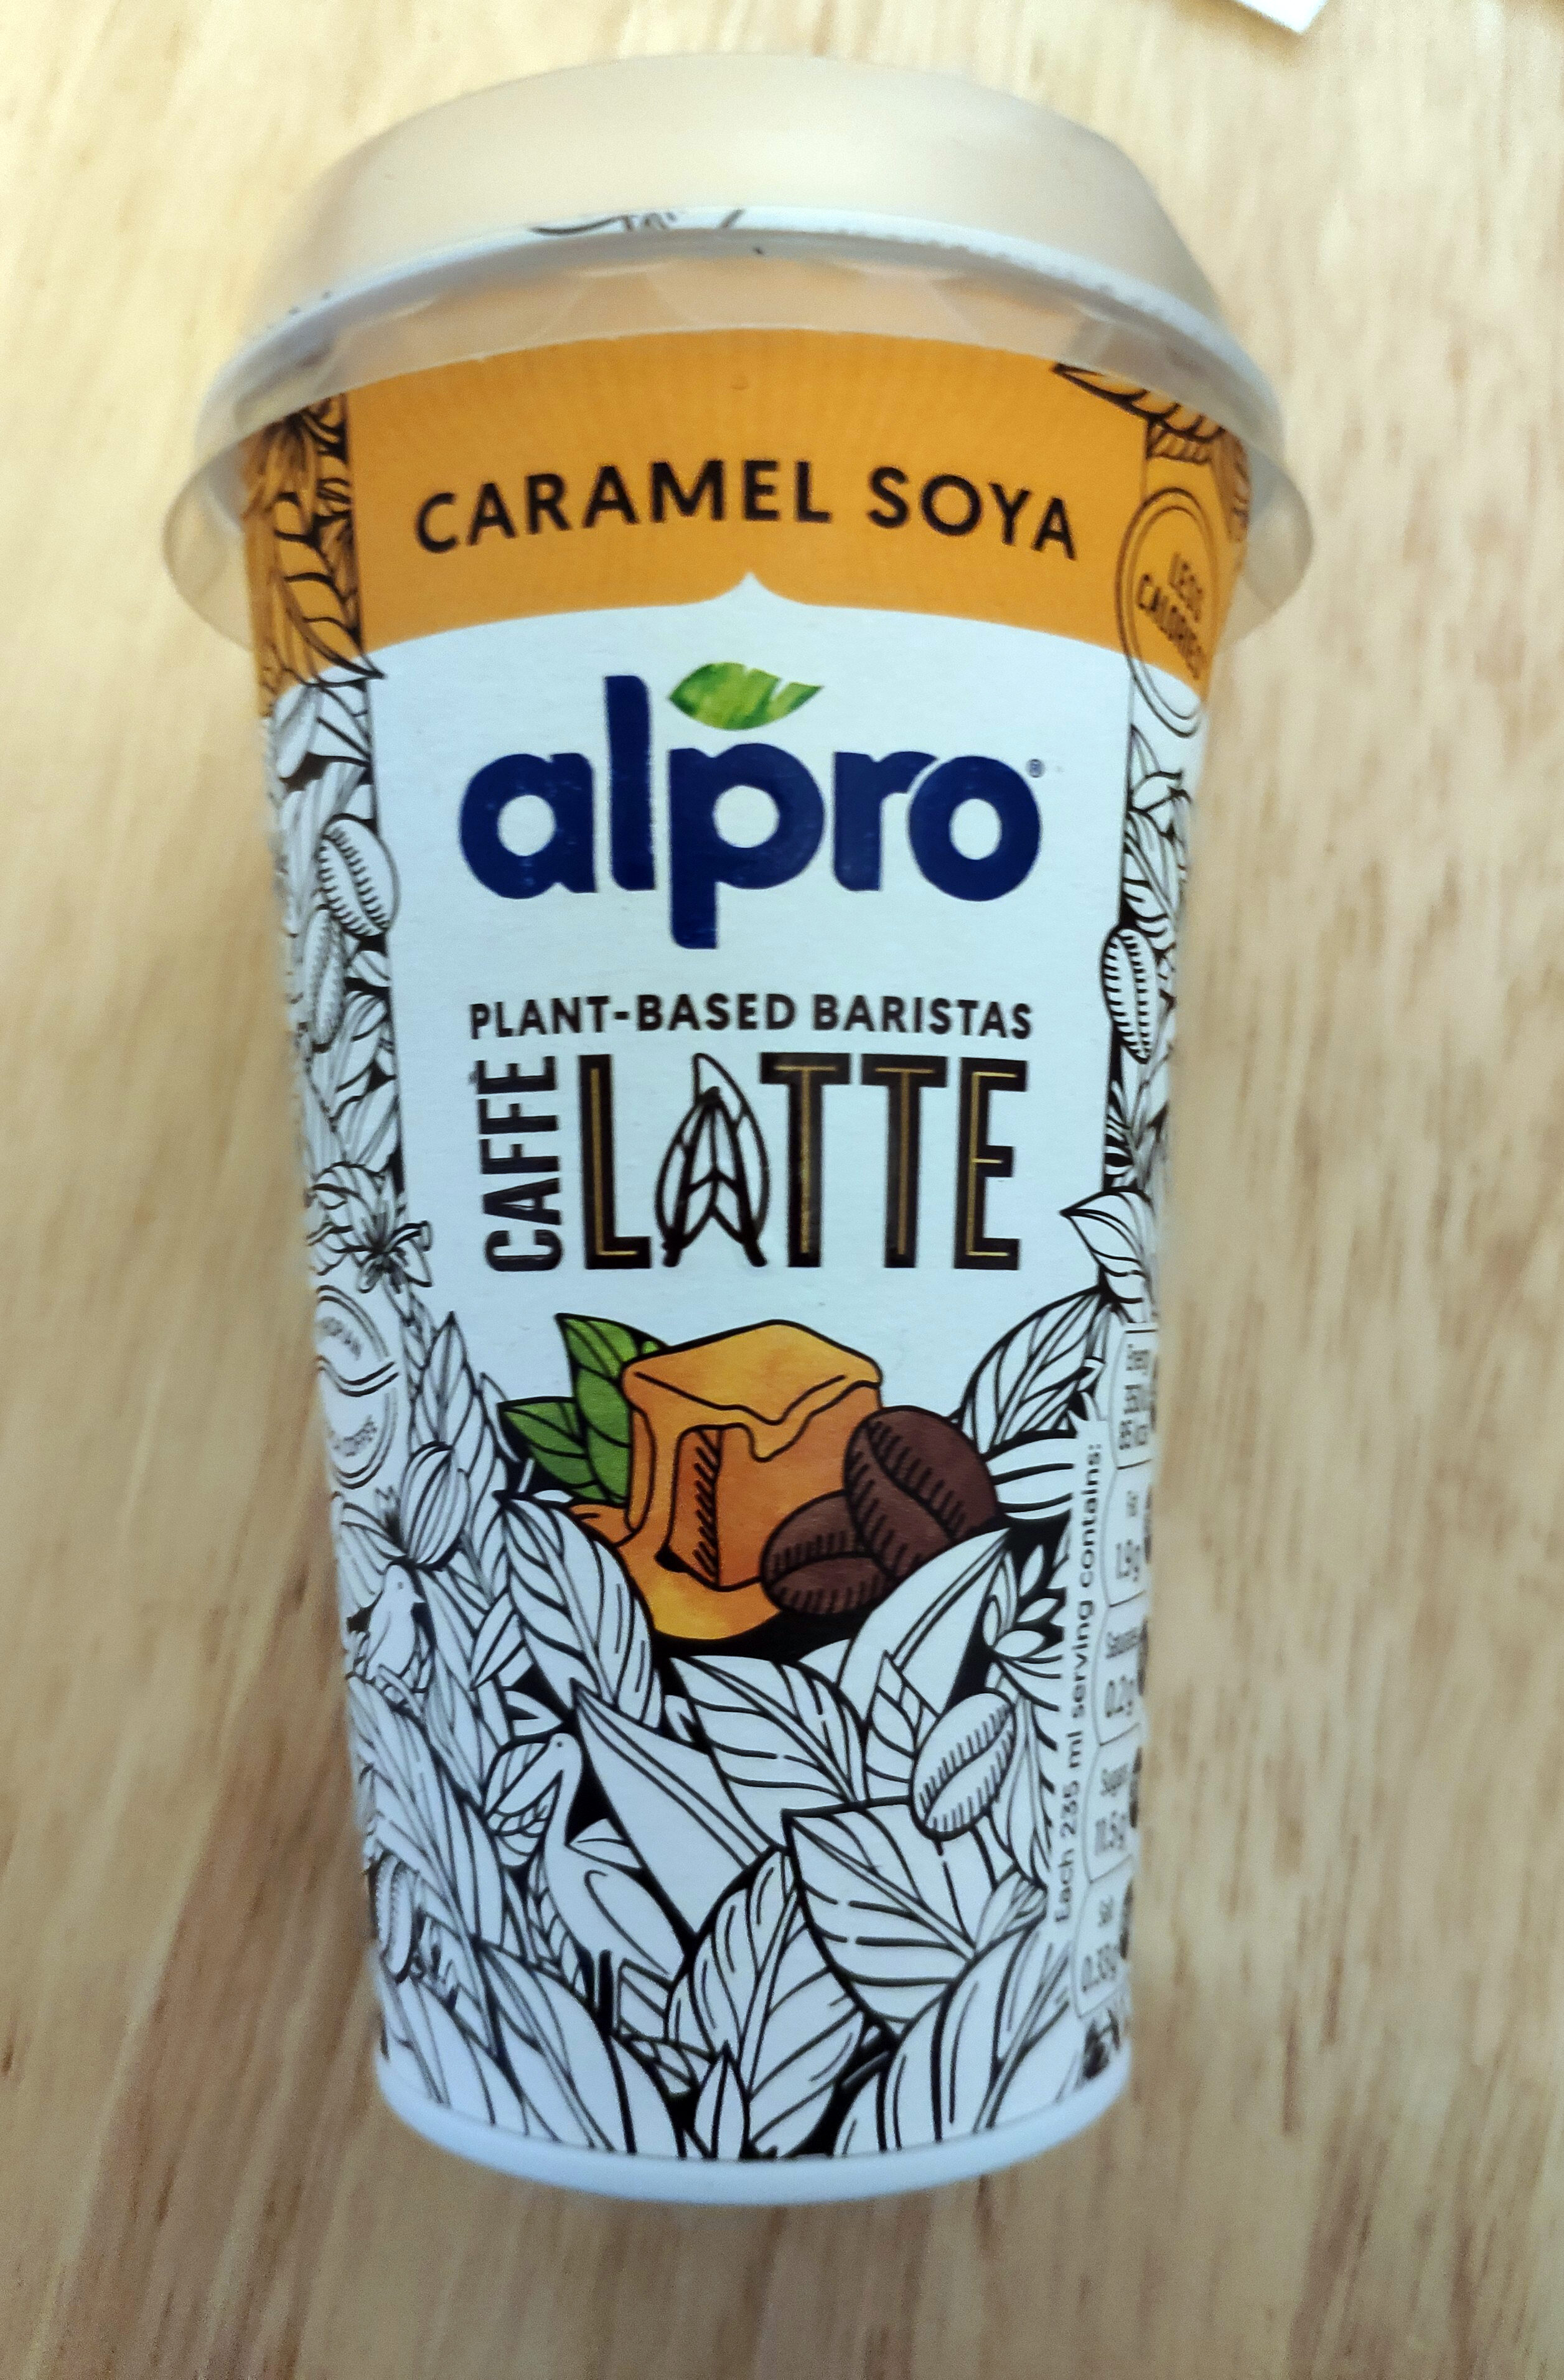 Caffè latte caramel soya - Product